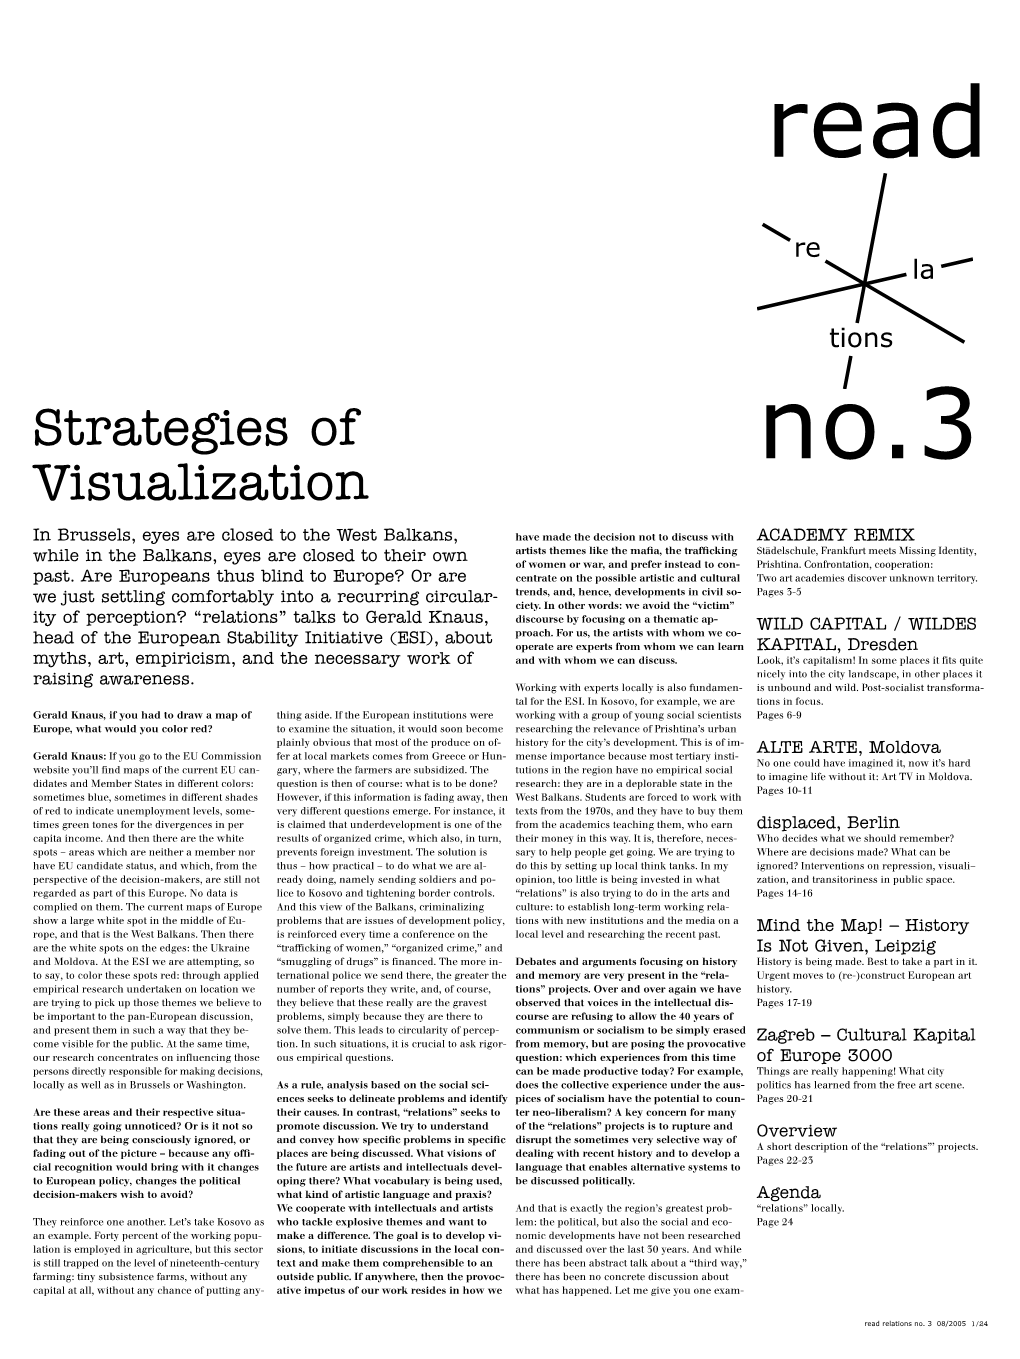 Strategies of Visualization